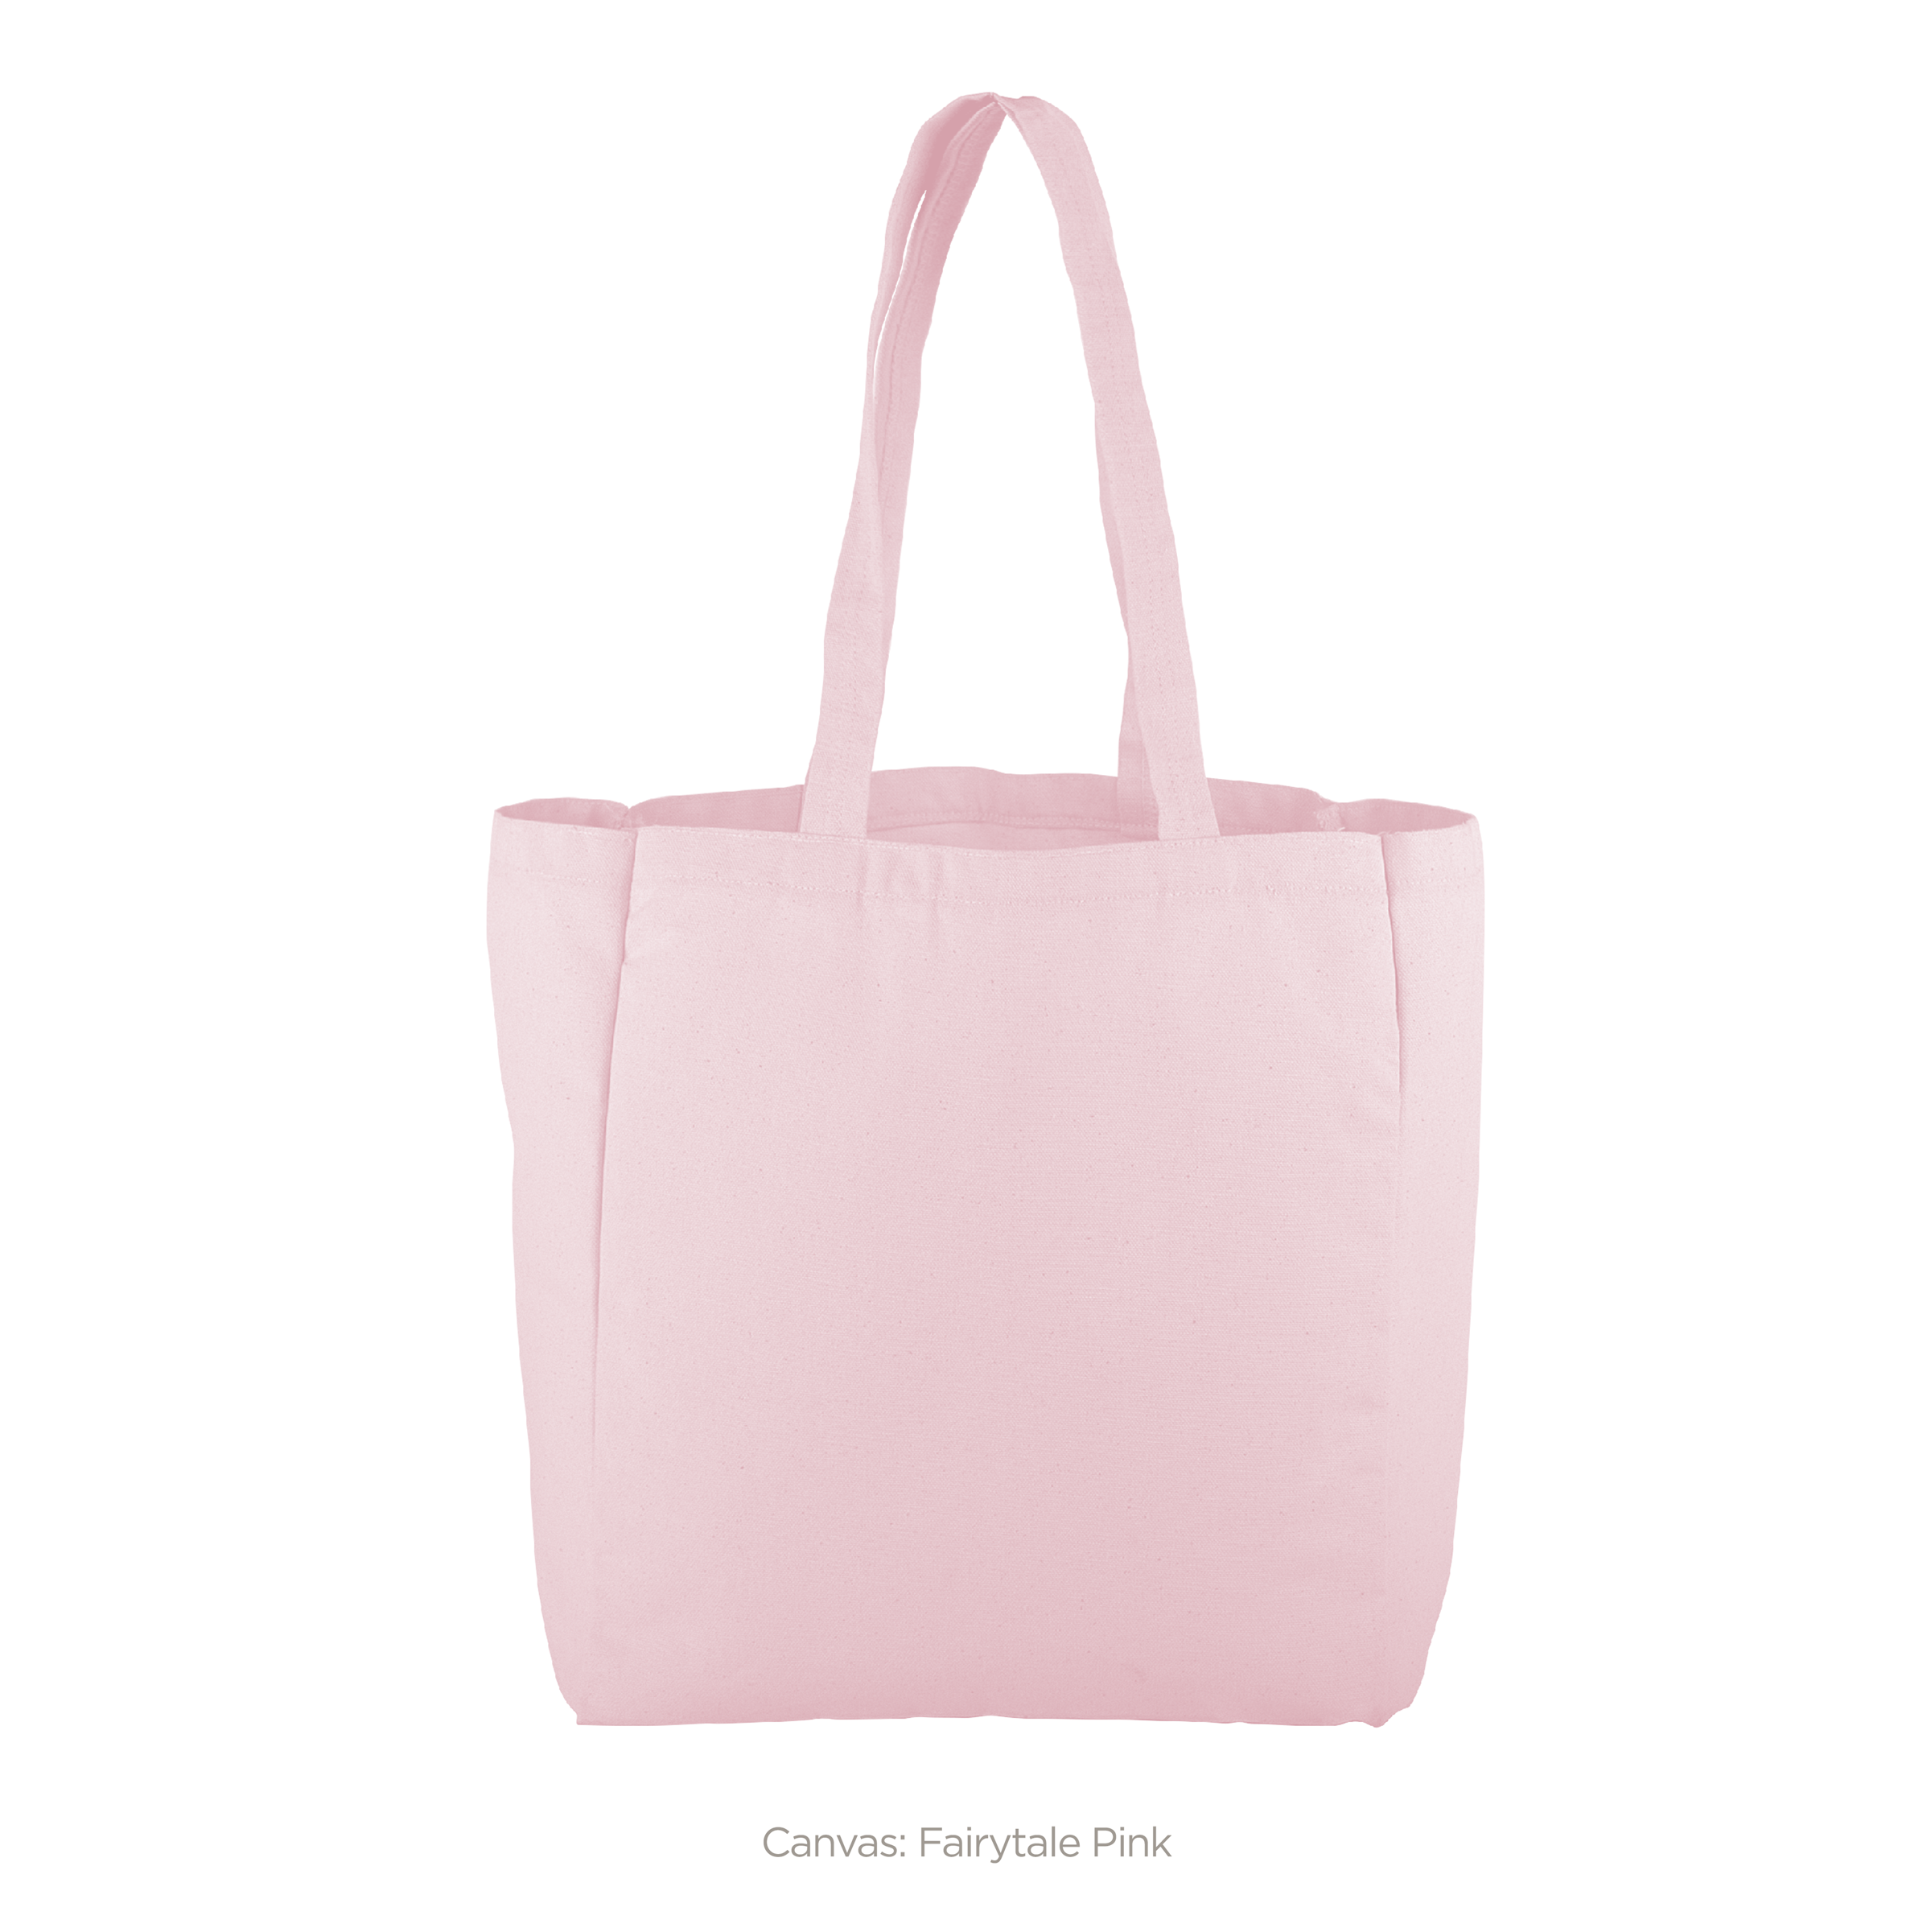 Vandy The Pink Tote Bag / Huge Tote Bag / Complexcon Tote Bag